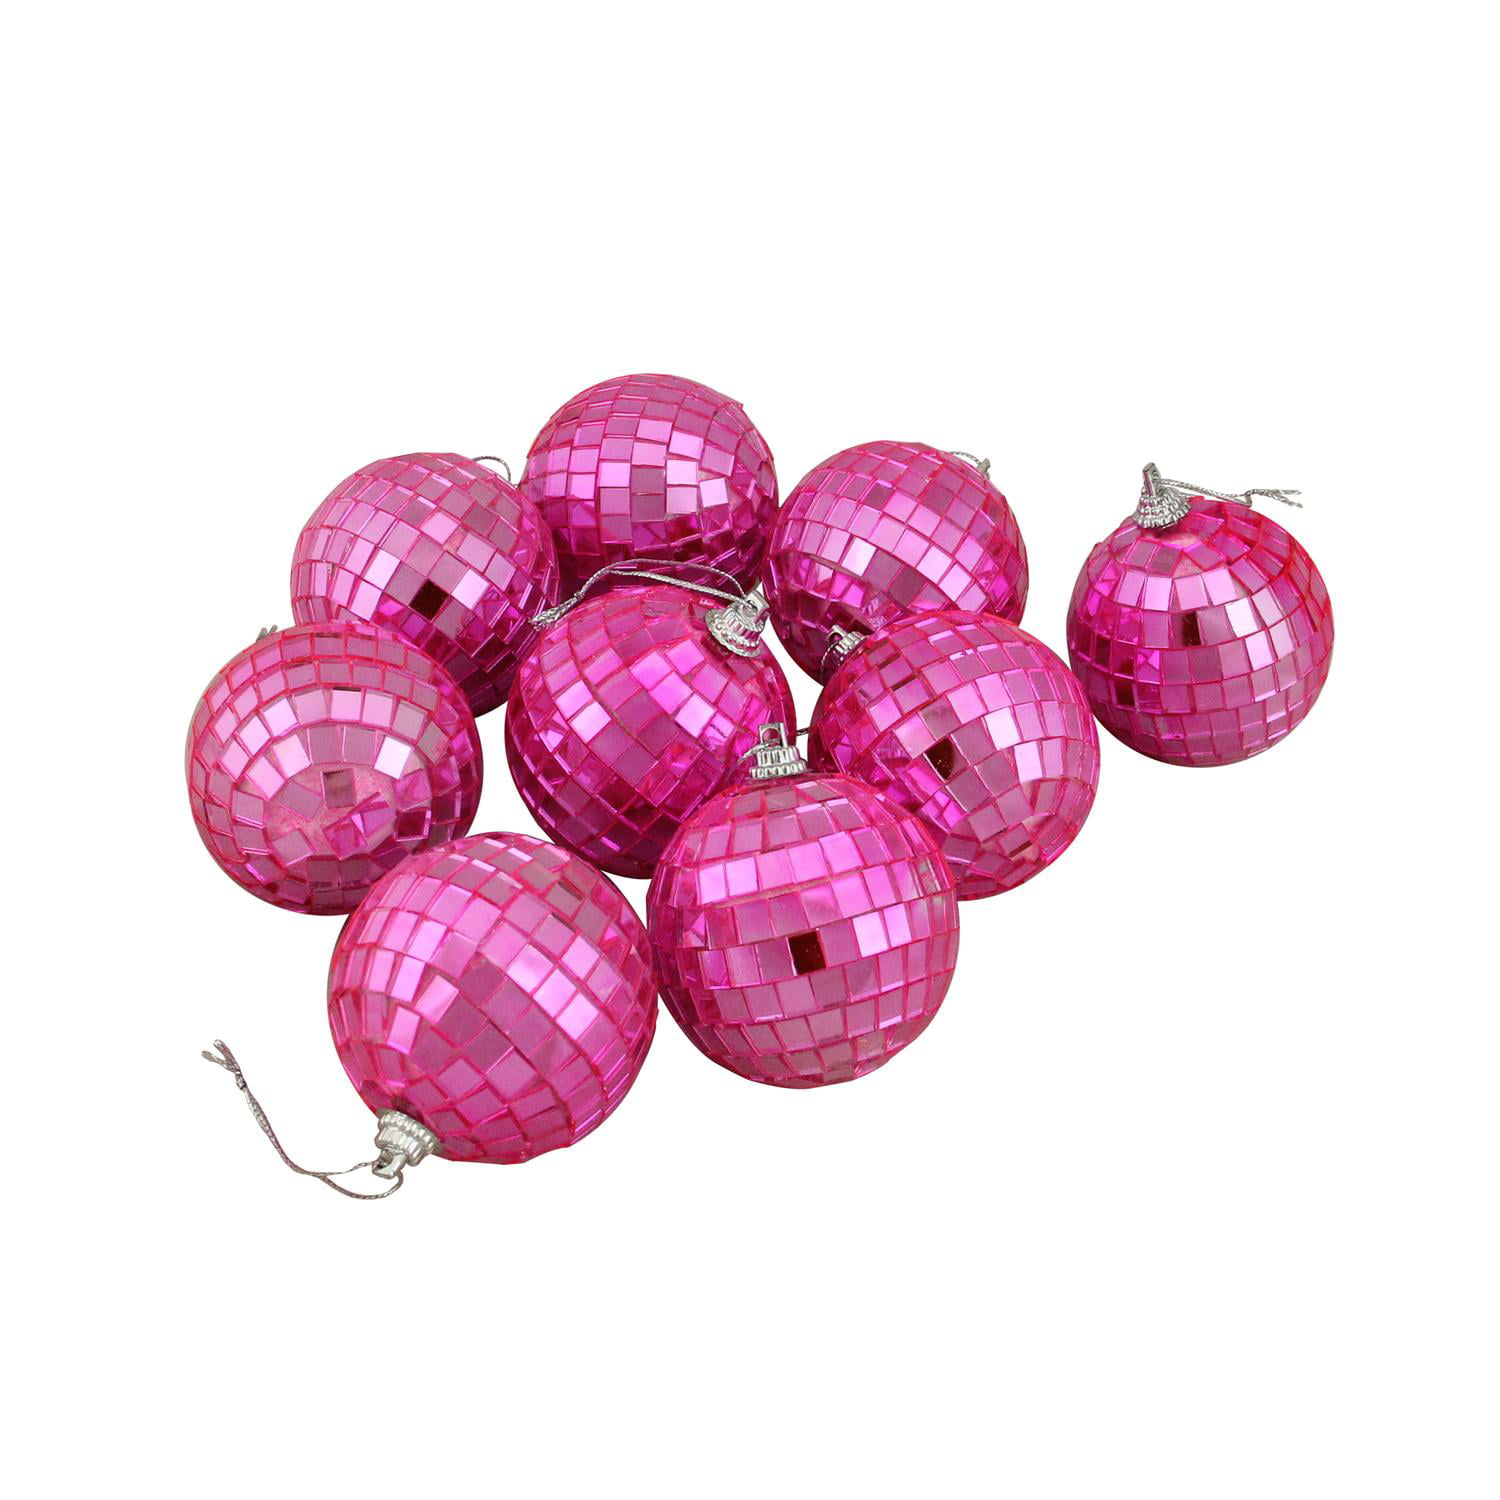 World Market Pink & Gold Ombre Disco Ball Ornament Winter